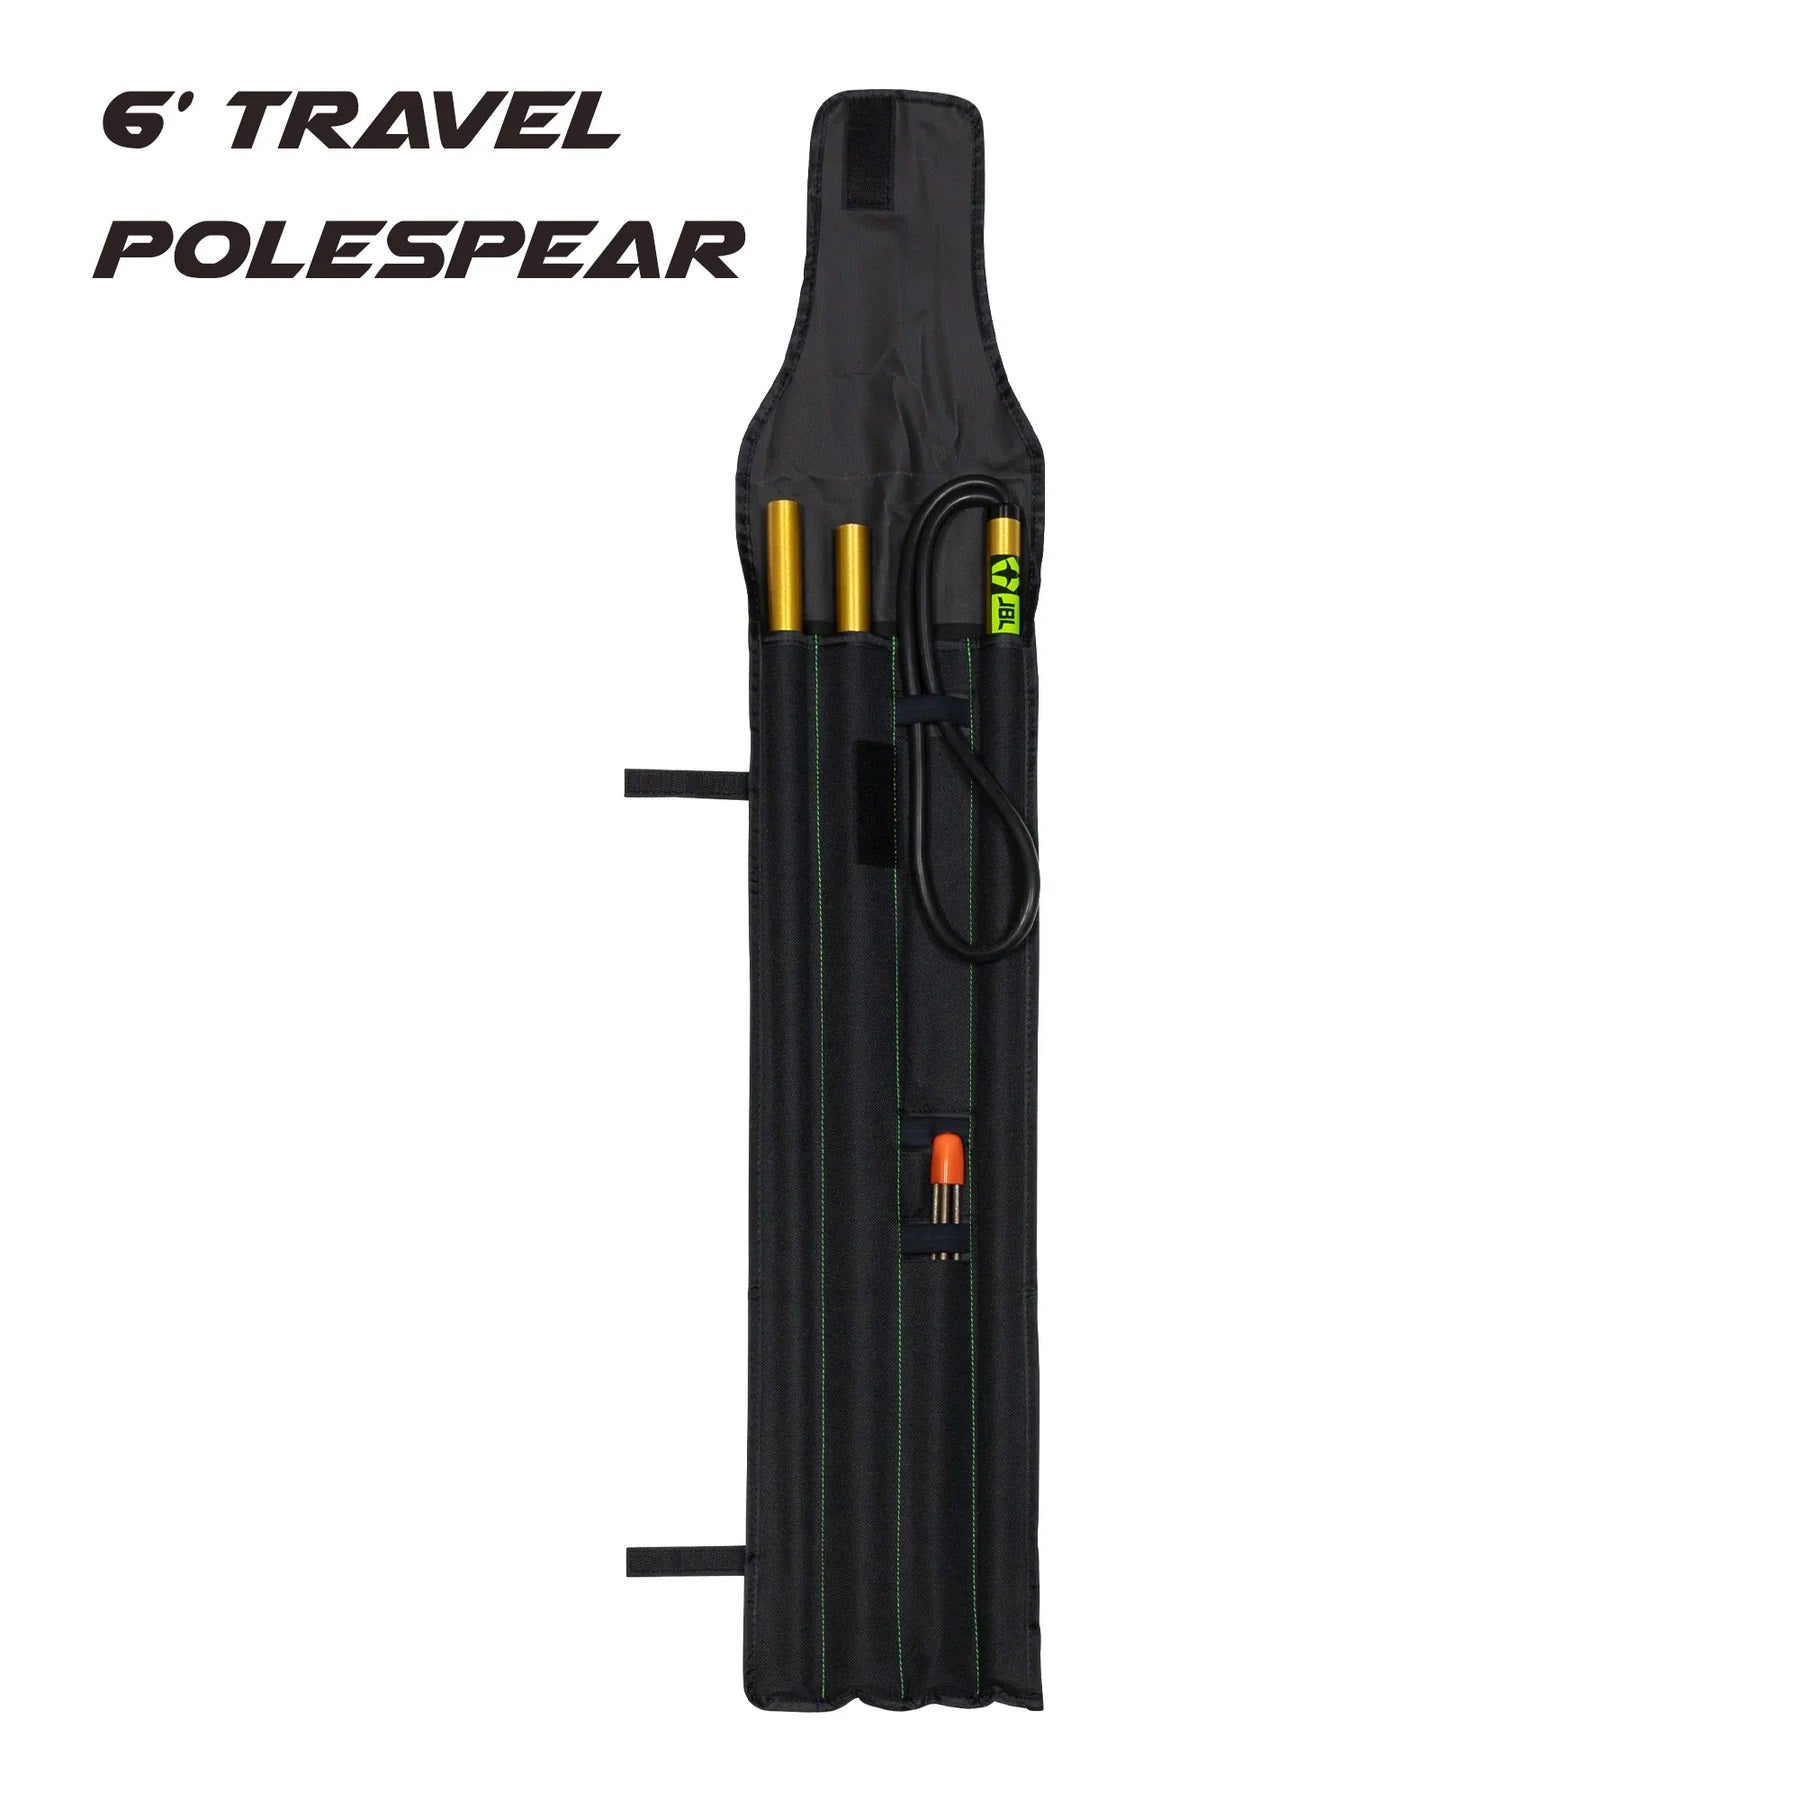 Aluminum Travel pole spear 6'